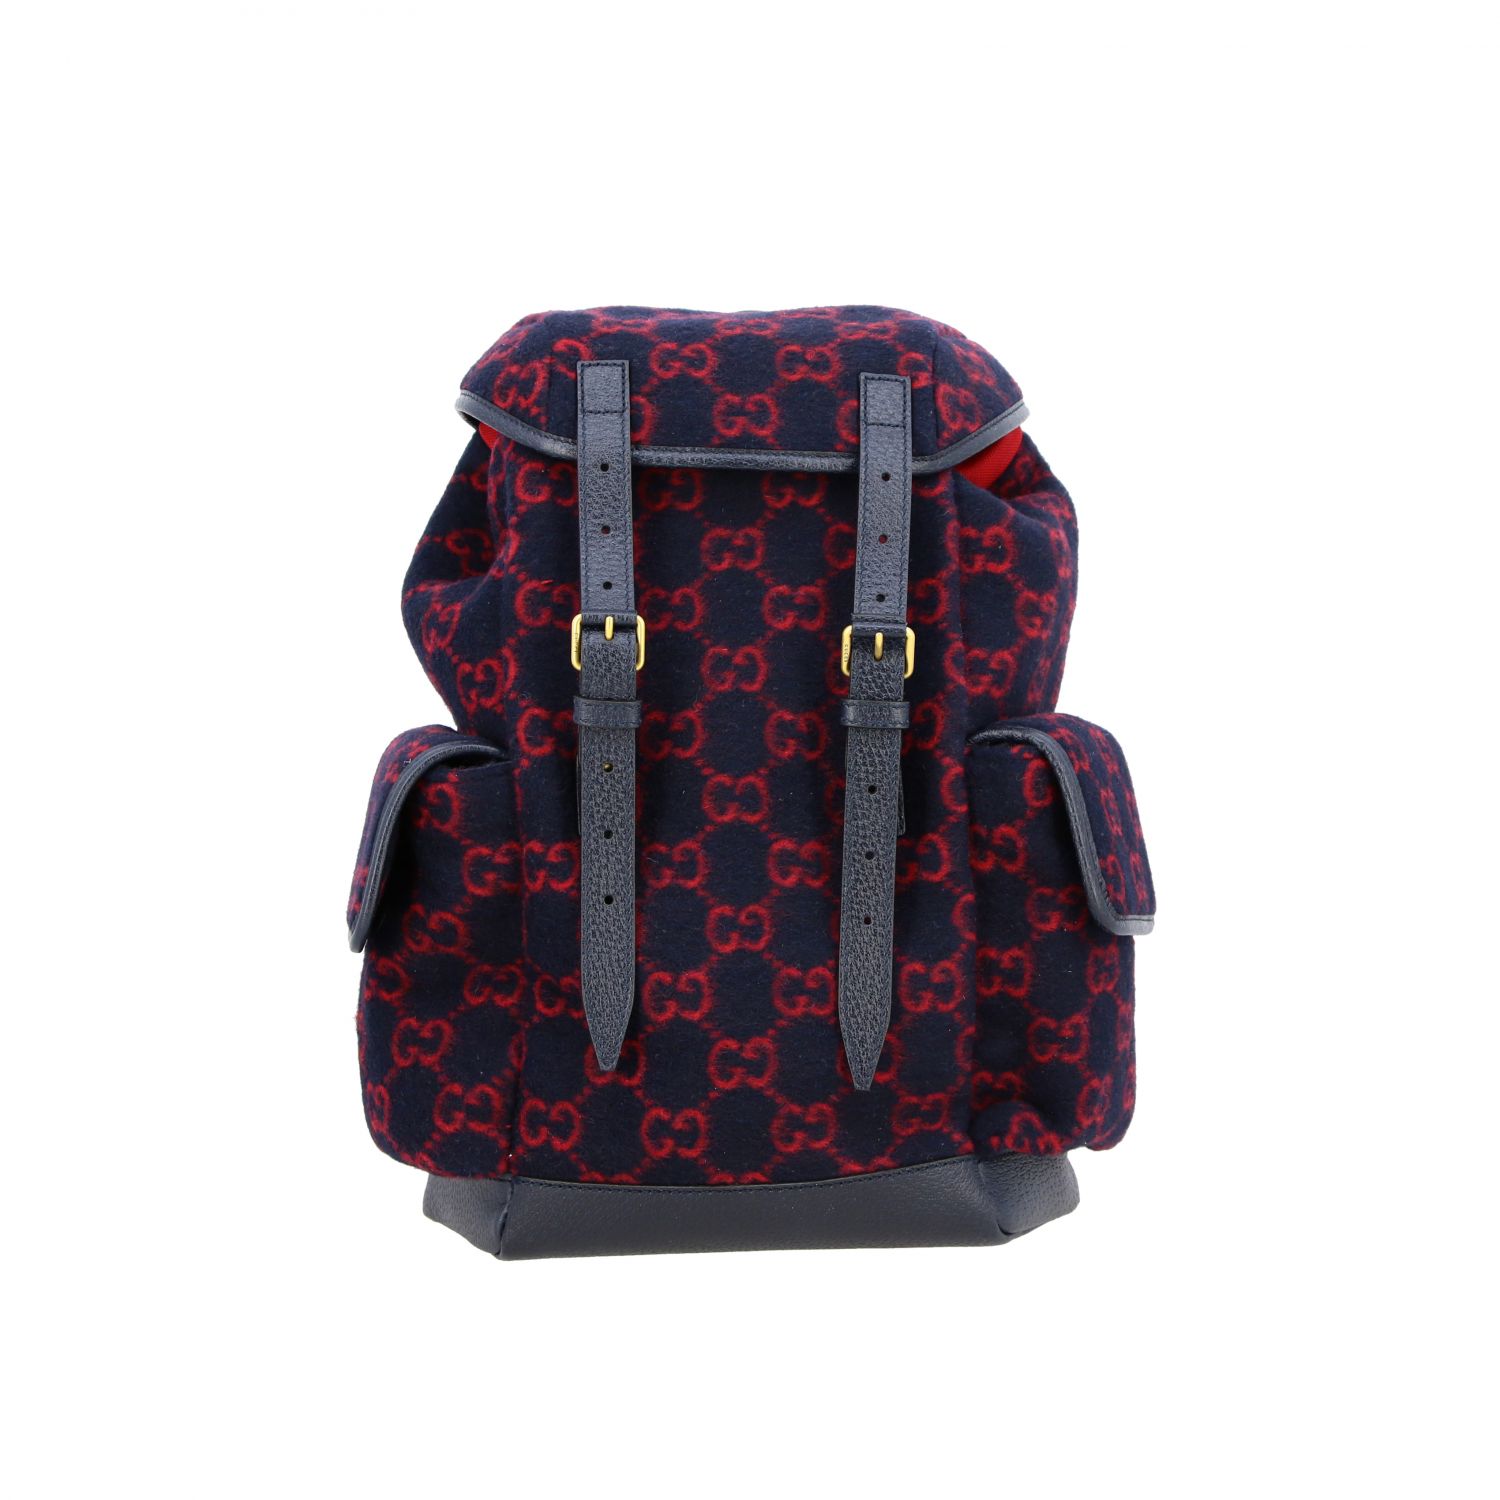 gucci backpack blue